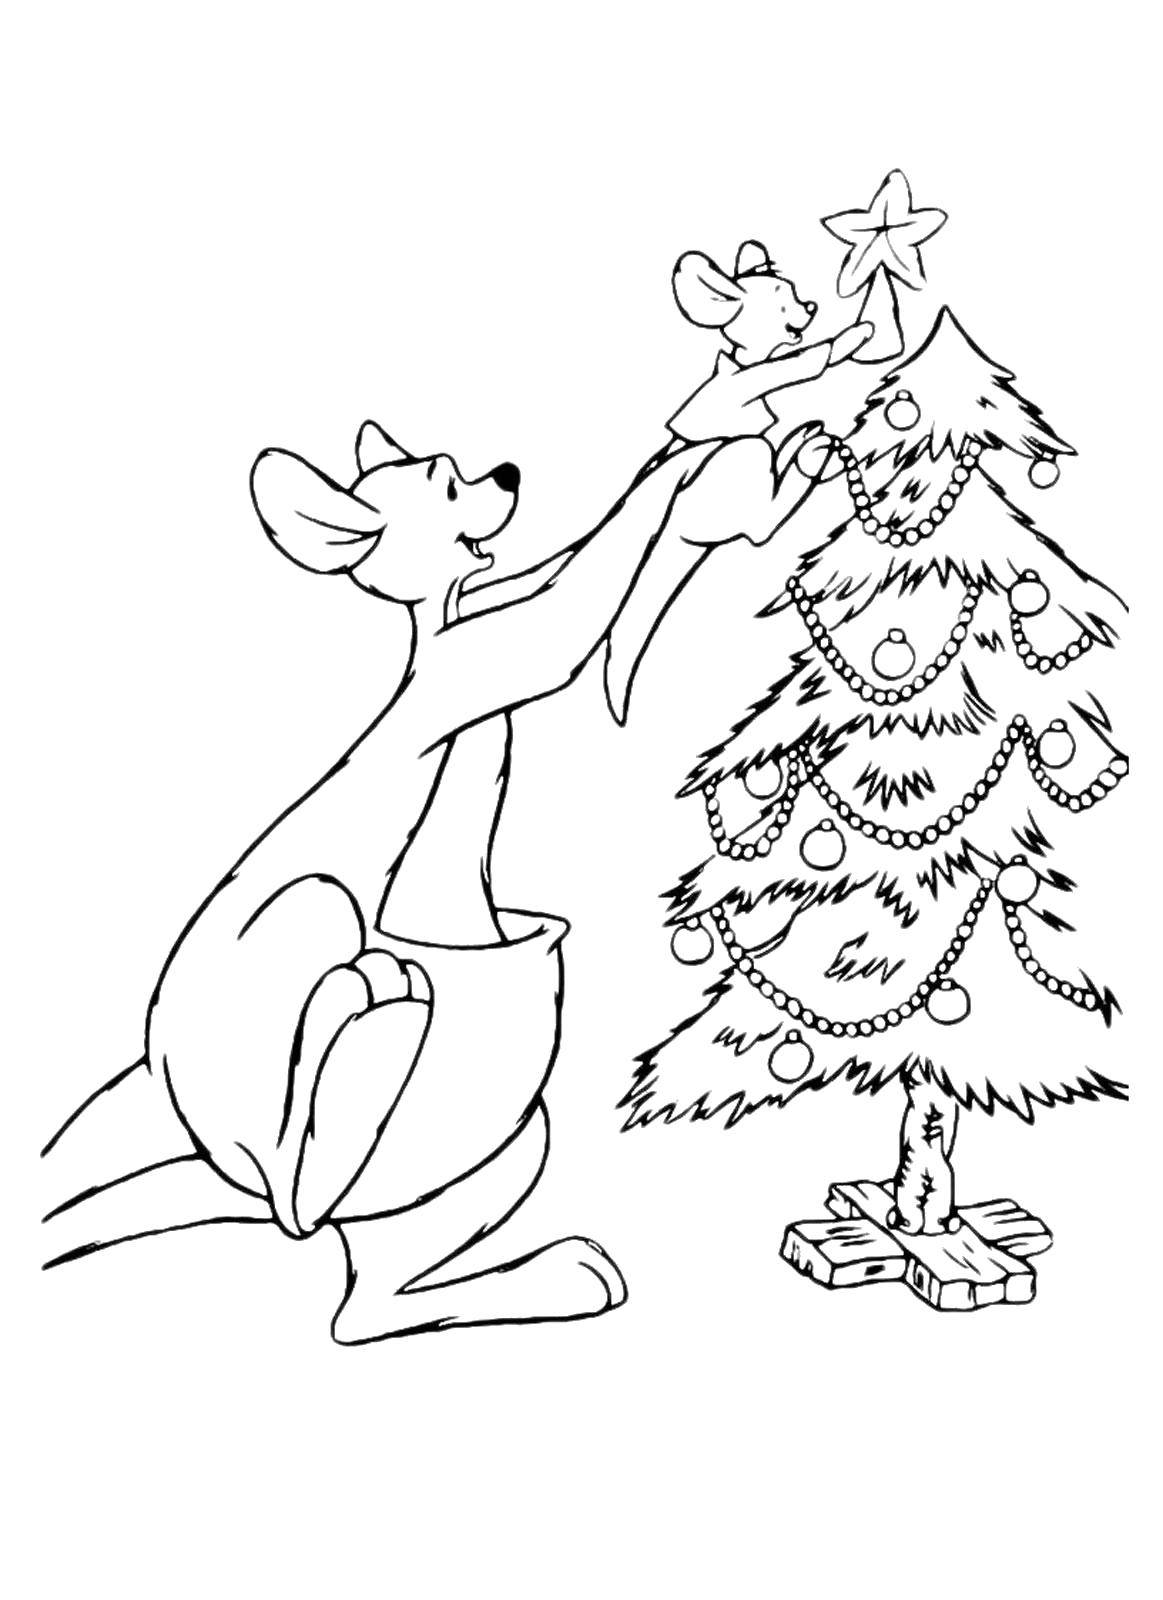 Coloring Kangaroo decorates the Christmas tree. Category coloring Christmas tree. Tags:  New Year, tree, gifts, toys.